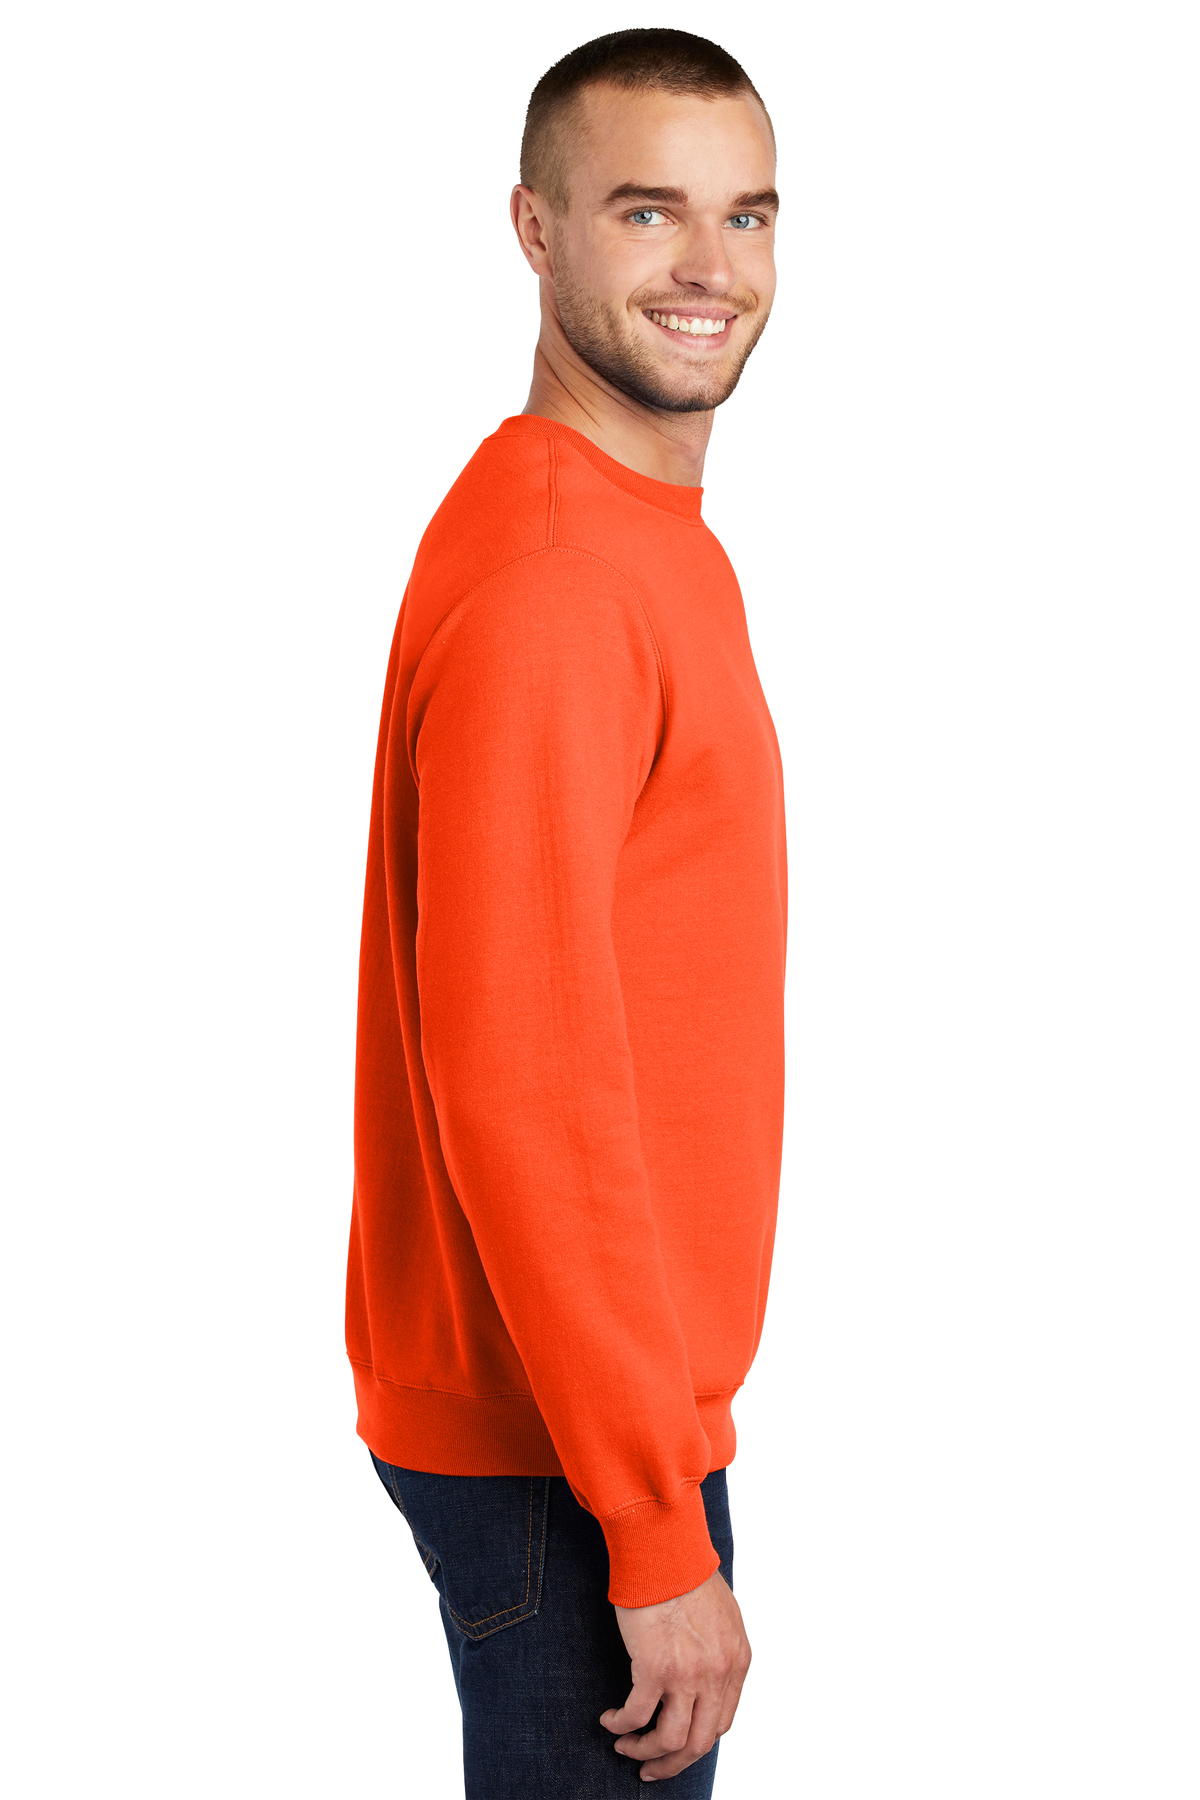 | Essential Company Crewneck Port | & Sweatshirt Product SanMar Fleece